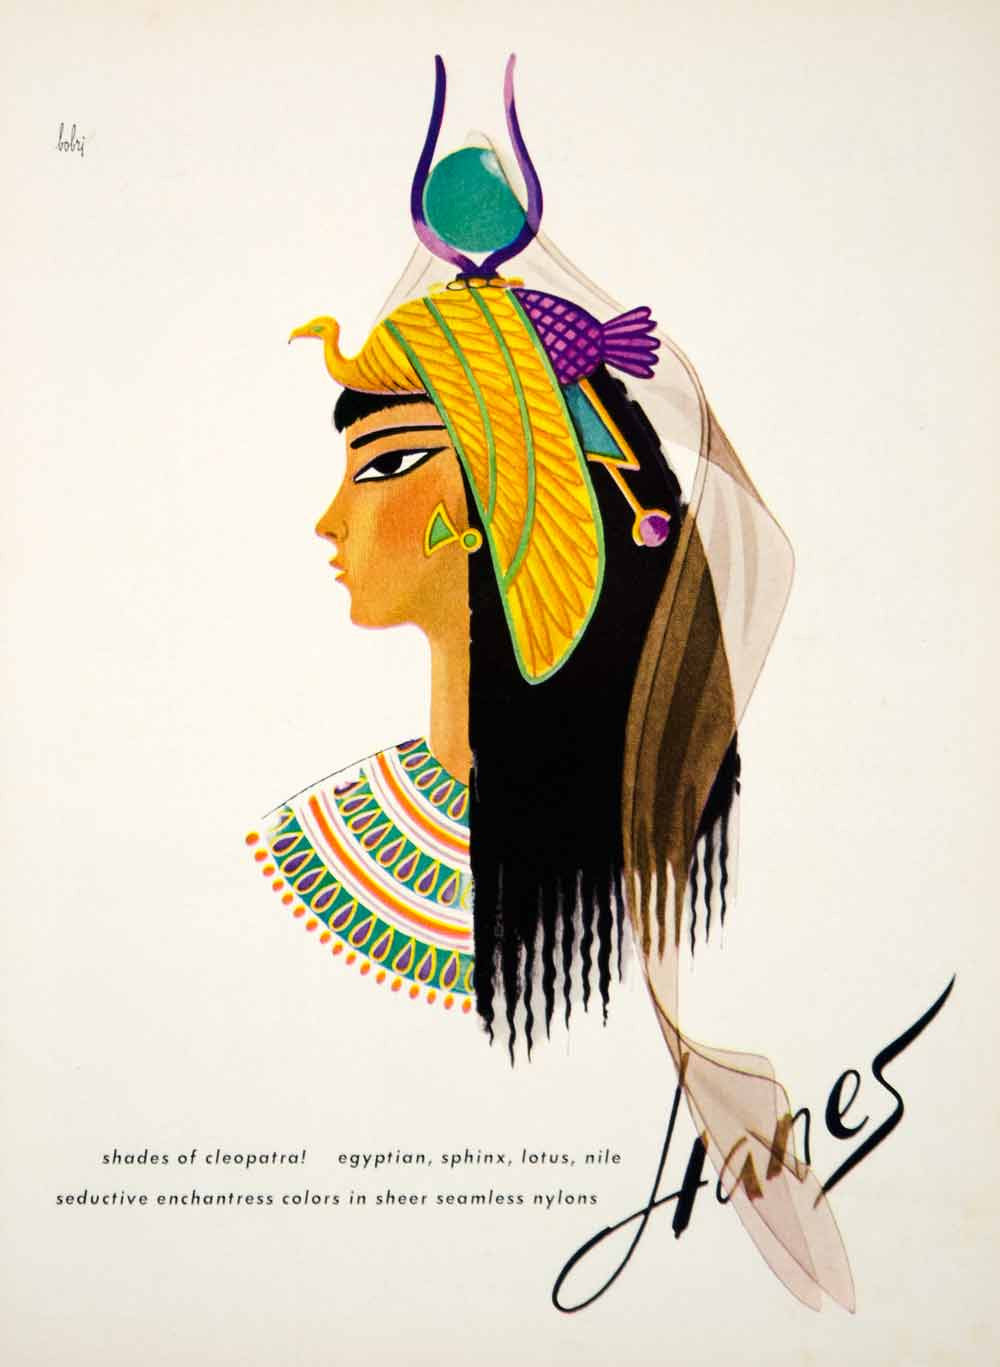 1963 Ad Vintage Hanes Nylons Queen Cleopatra Bobri Art Vladimir Bobritsky YHB5 - Period Paper
